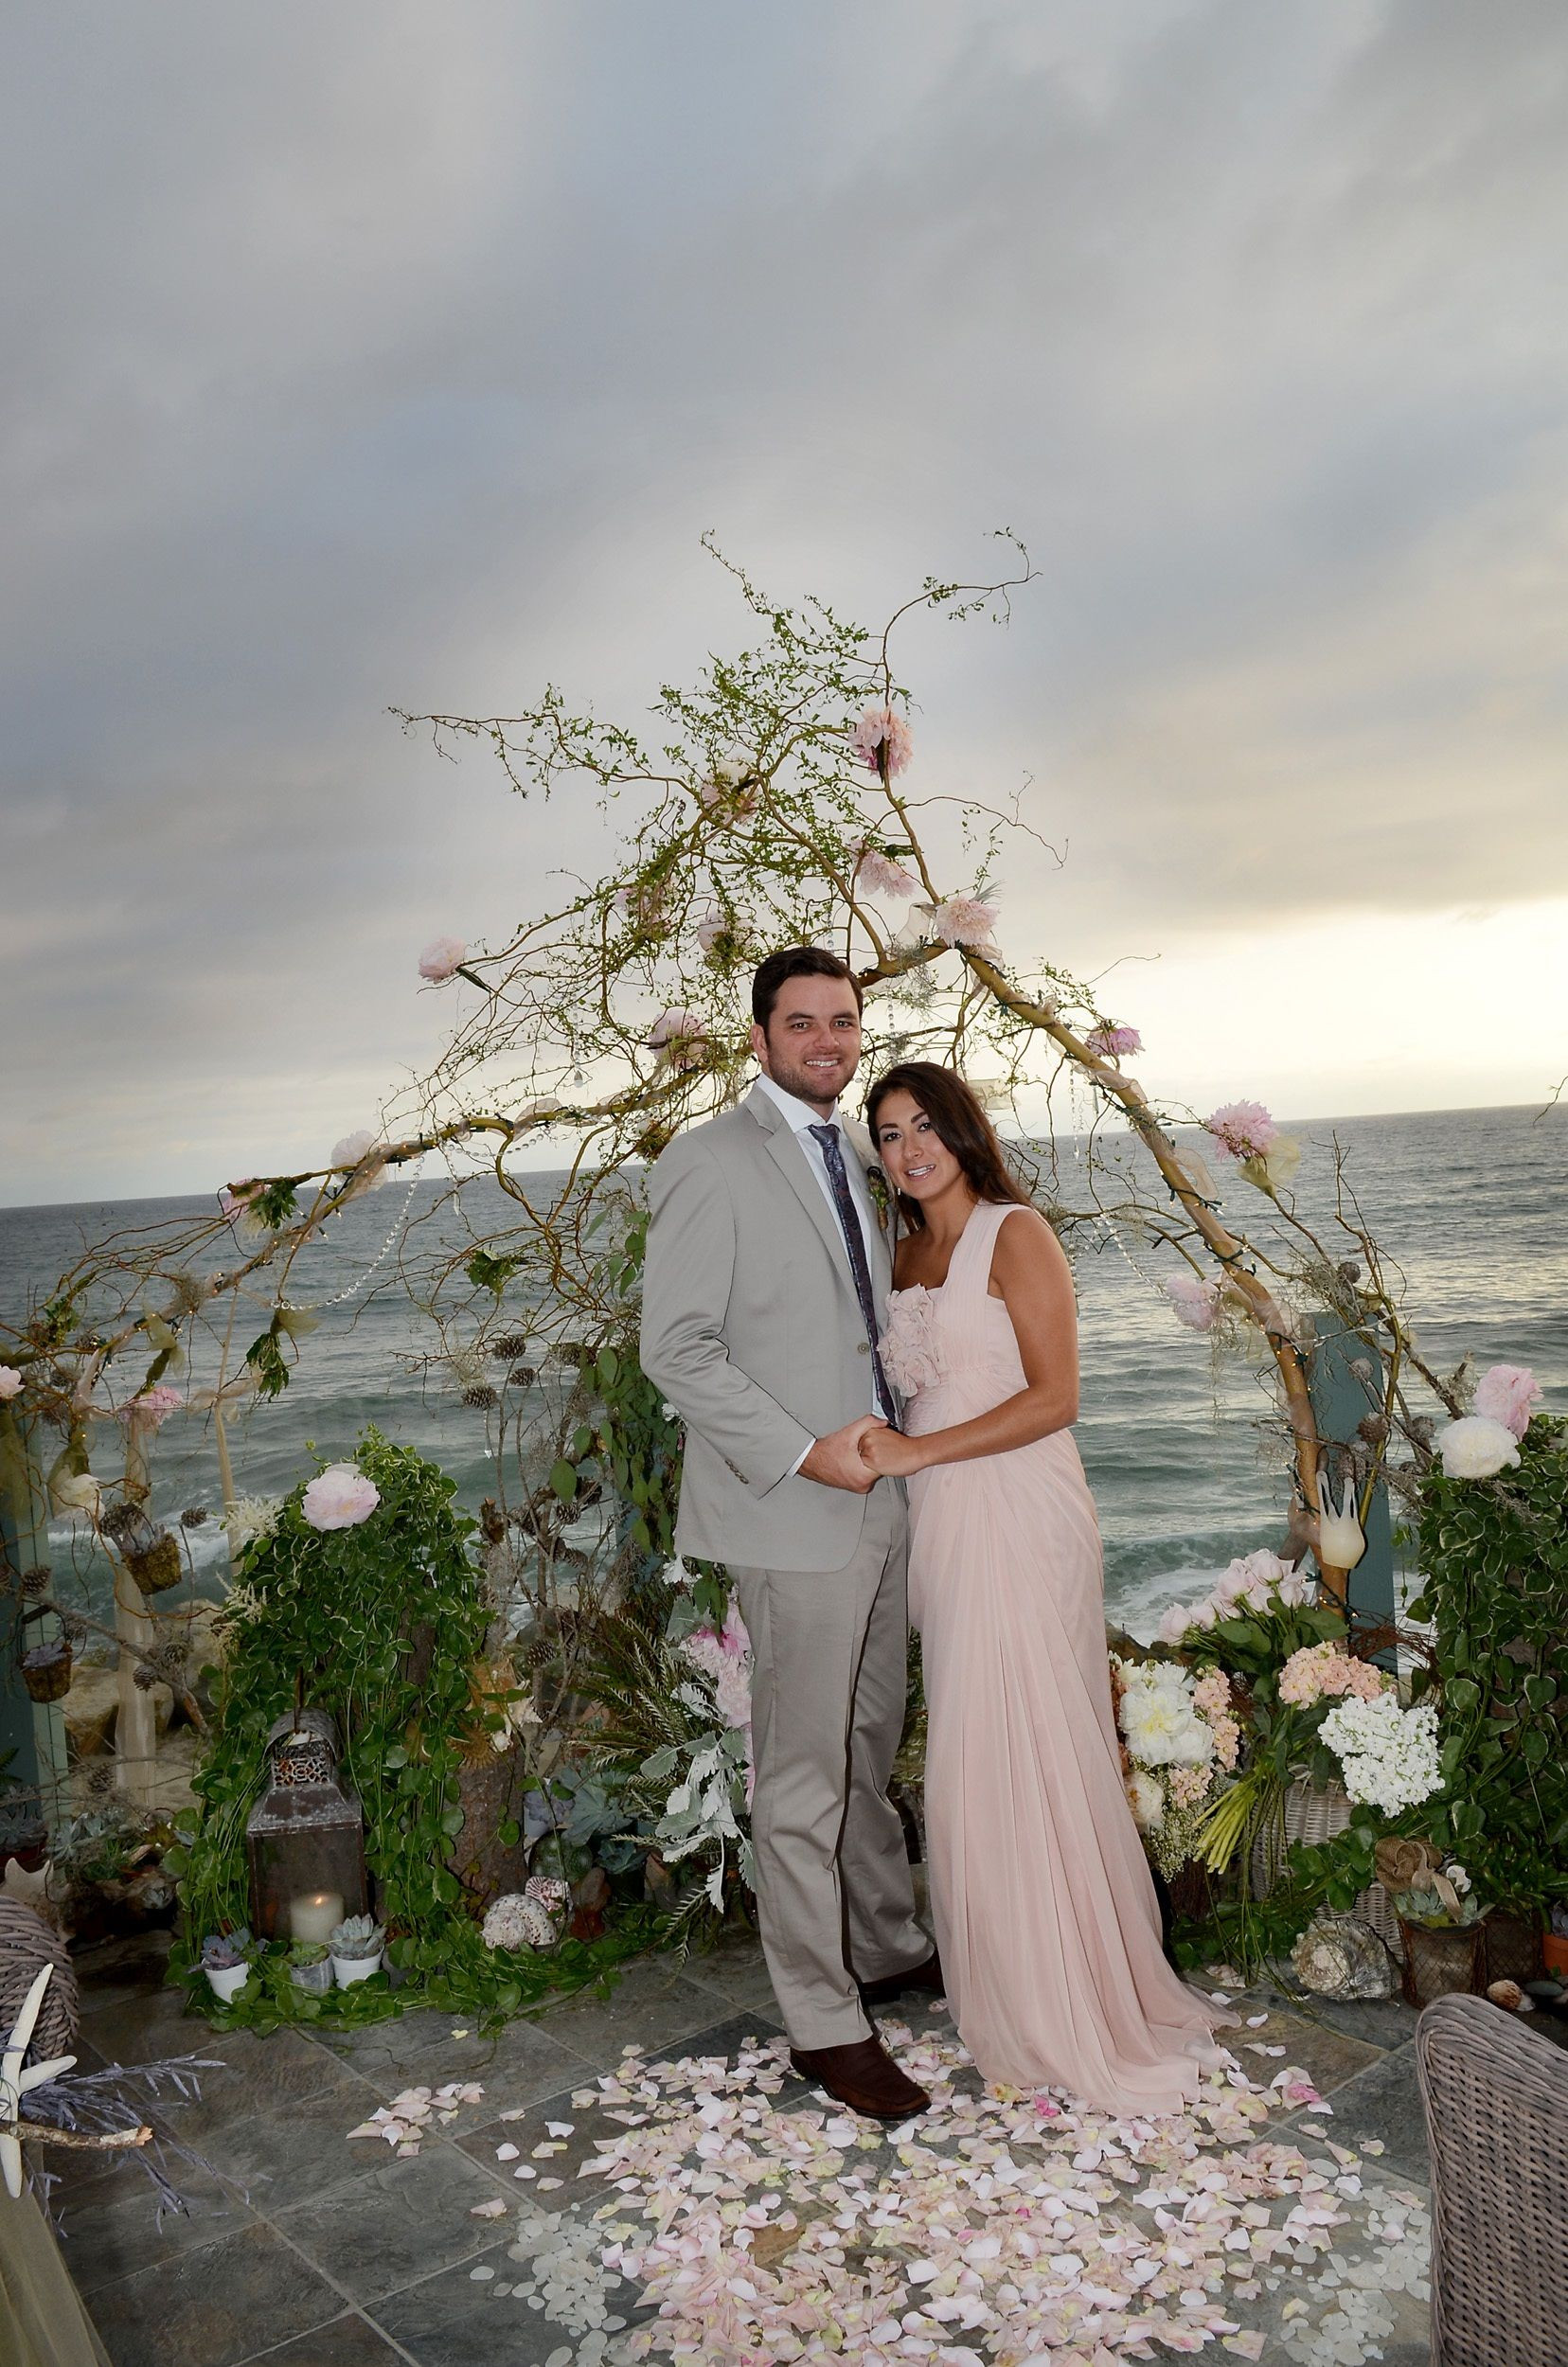 California Beach Weddings
 Beach Wedding Venue in Oceanside Ca 760 722 1866